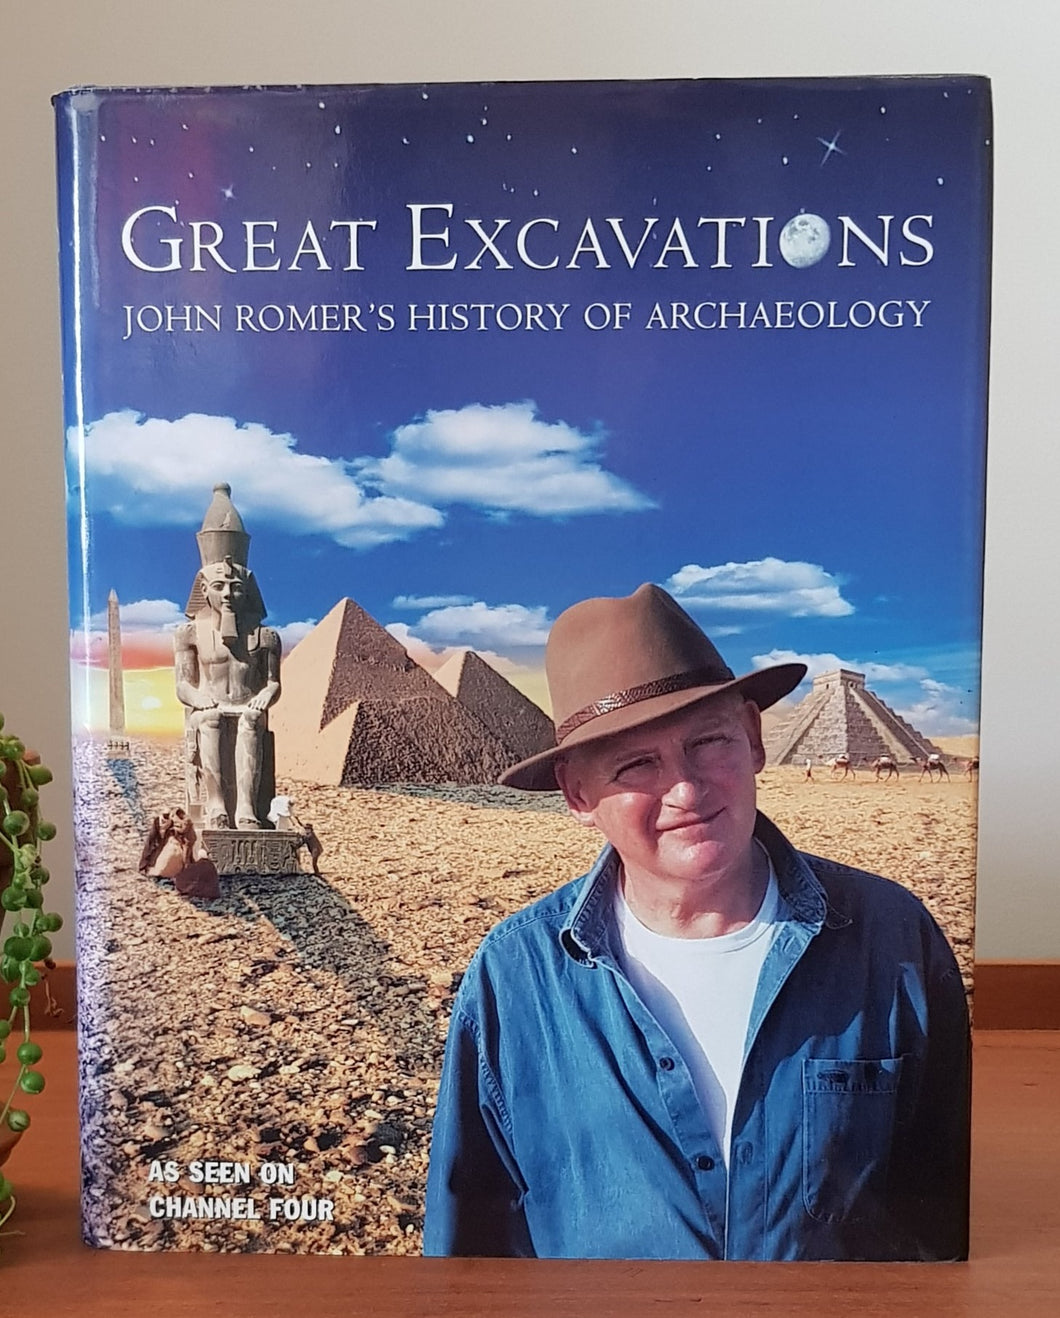 Great Excavations: John Romer's History of Archaeology by John Romer